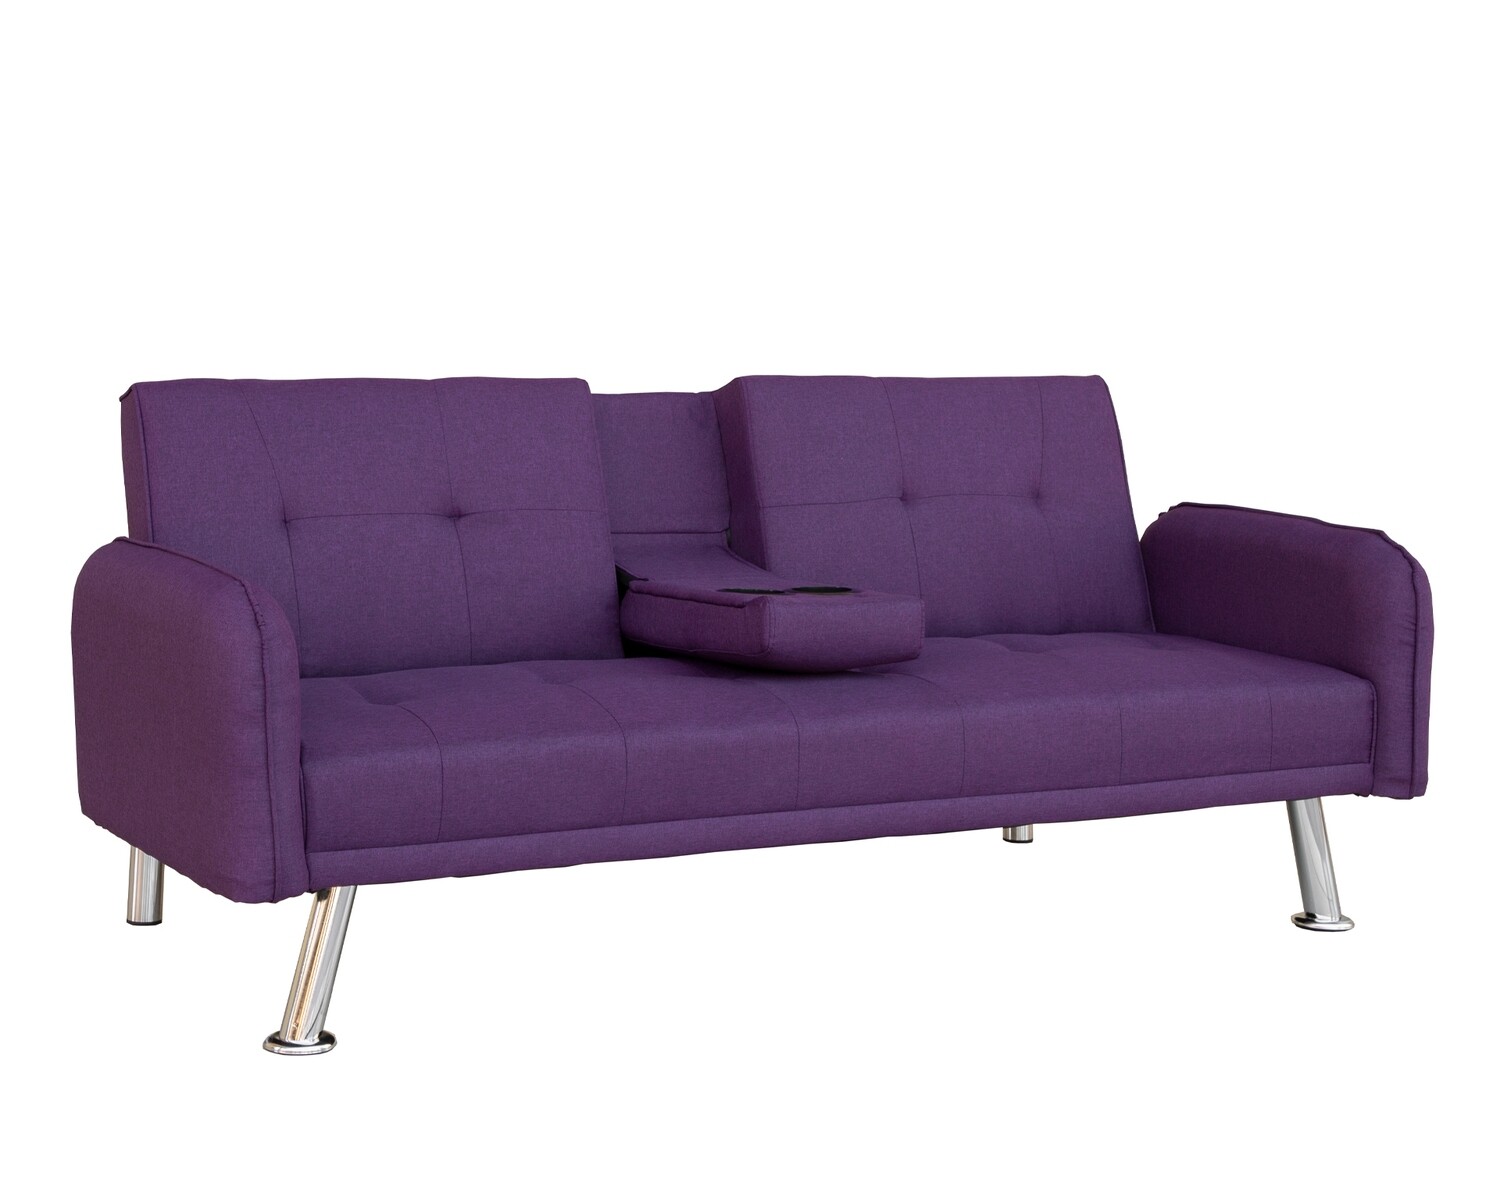 Flotti Valory Sofa Bed (Purple, Grey, Black, Brown)